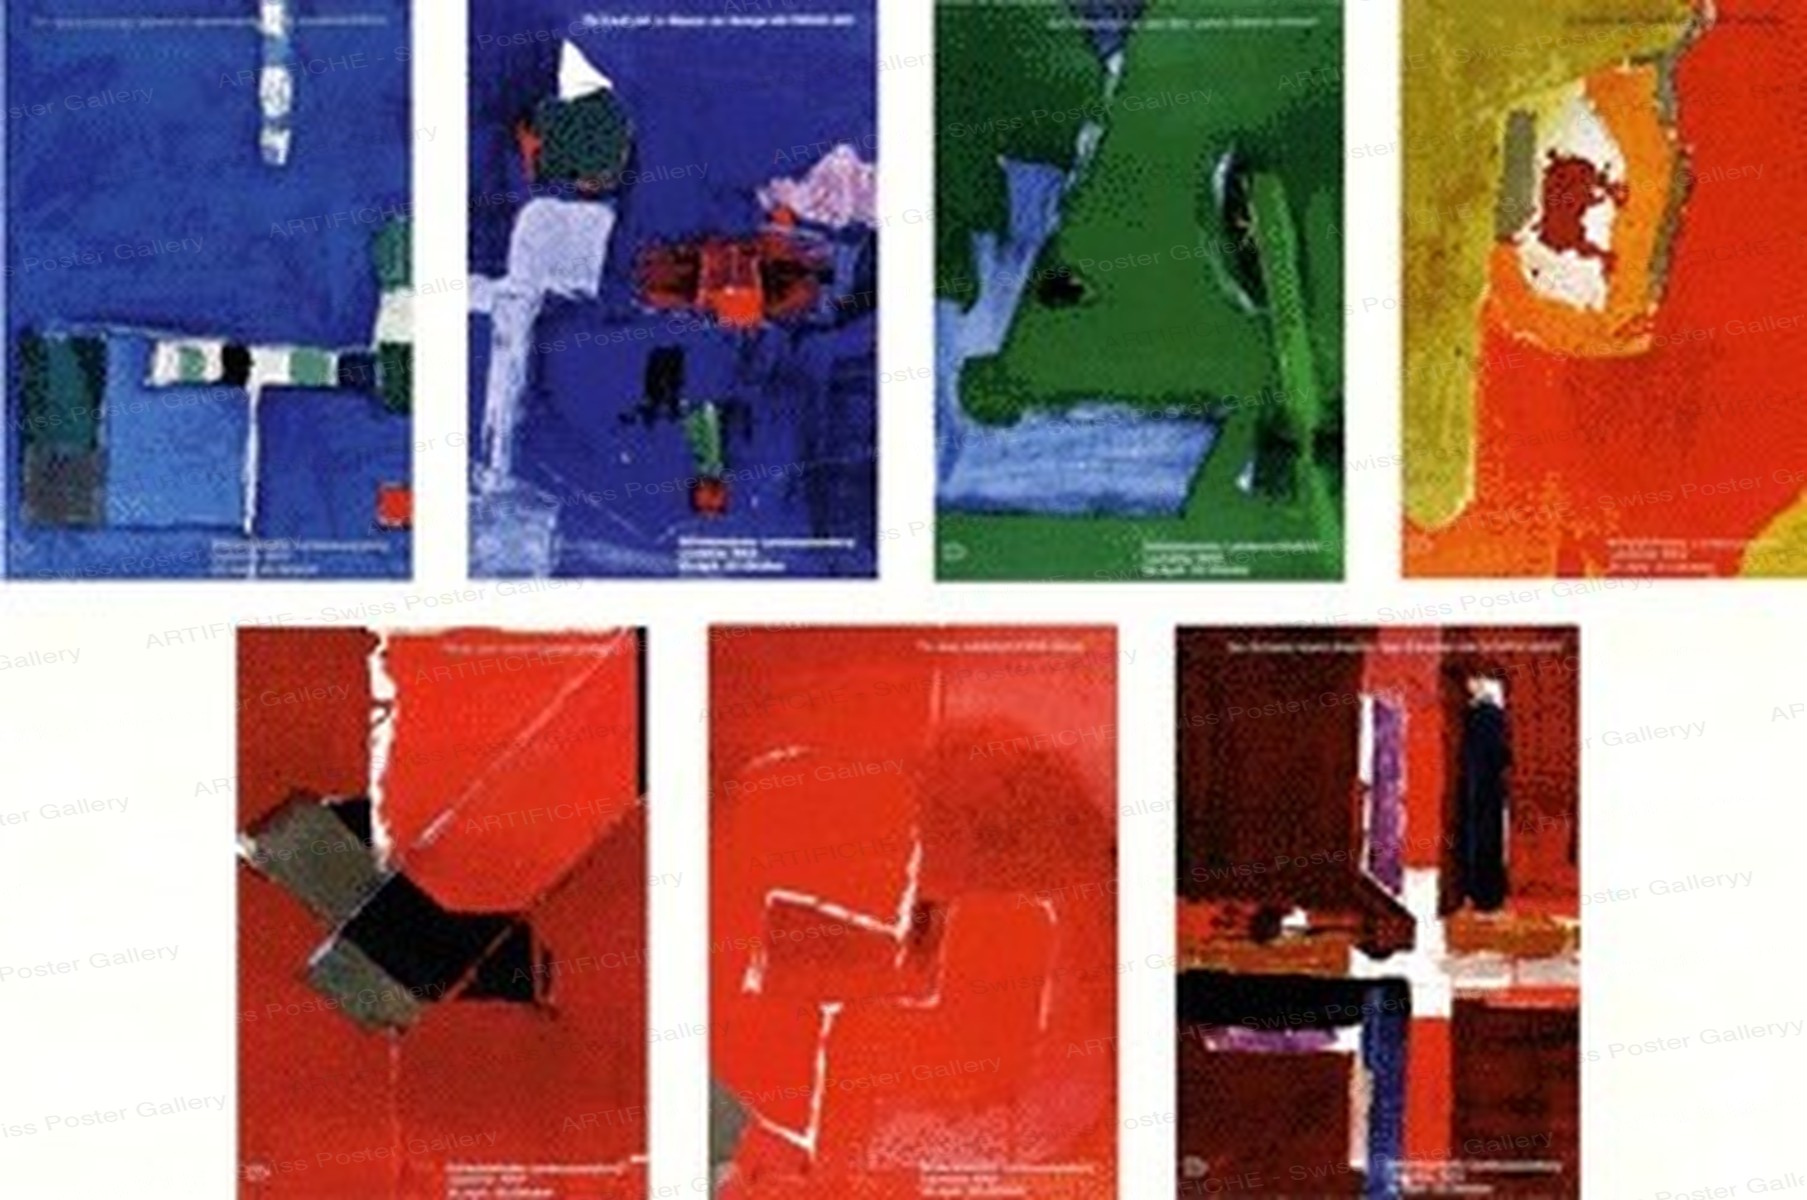 Swiss National Exhibition Lausanne 1964, 7 posters, Hans Falk